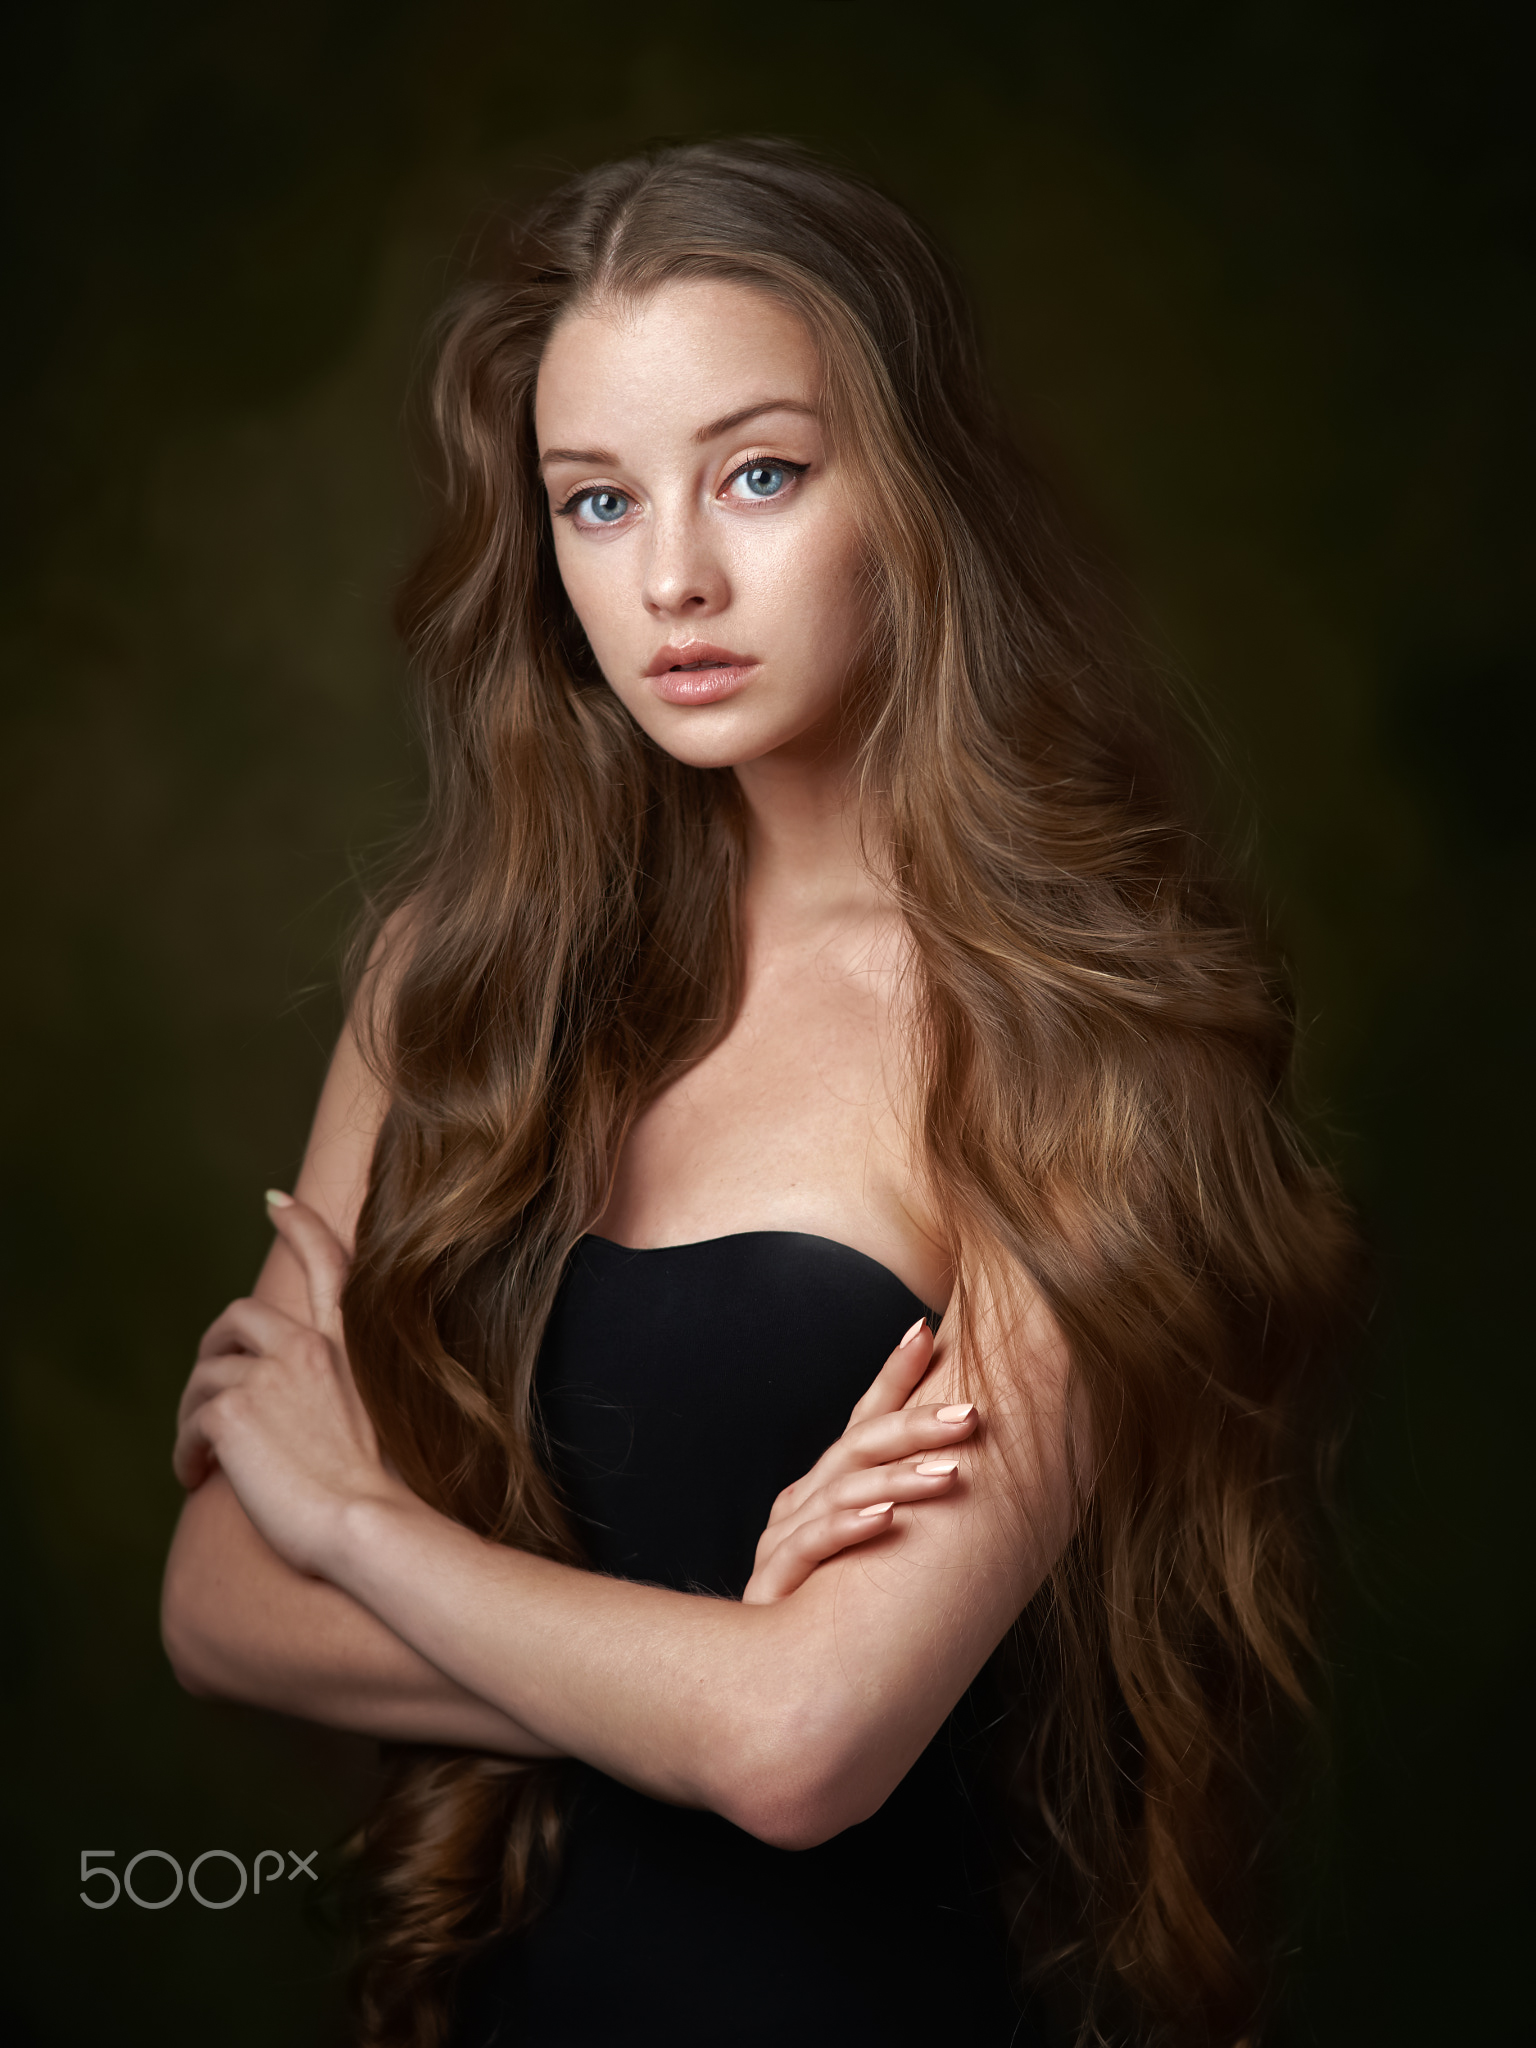 Alexander Vinogradov Women Maria Zhgenti Brunette Long Hair Wavy Hair Arms Crossed Black Clothing Si 1536x2048